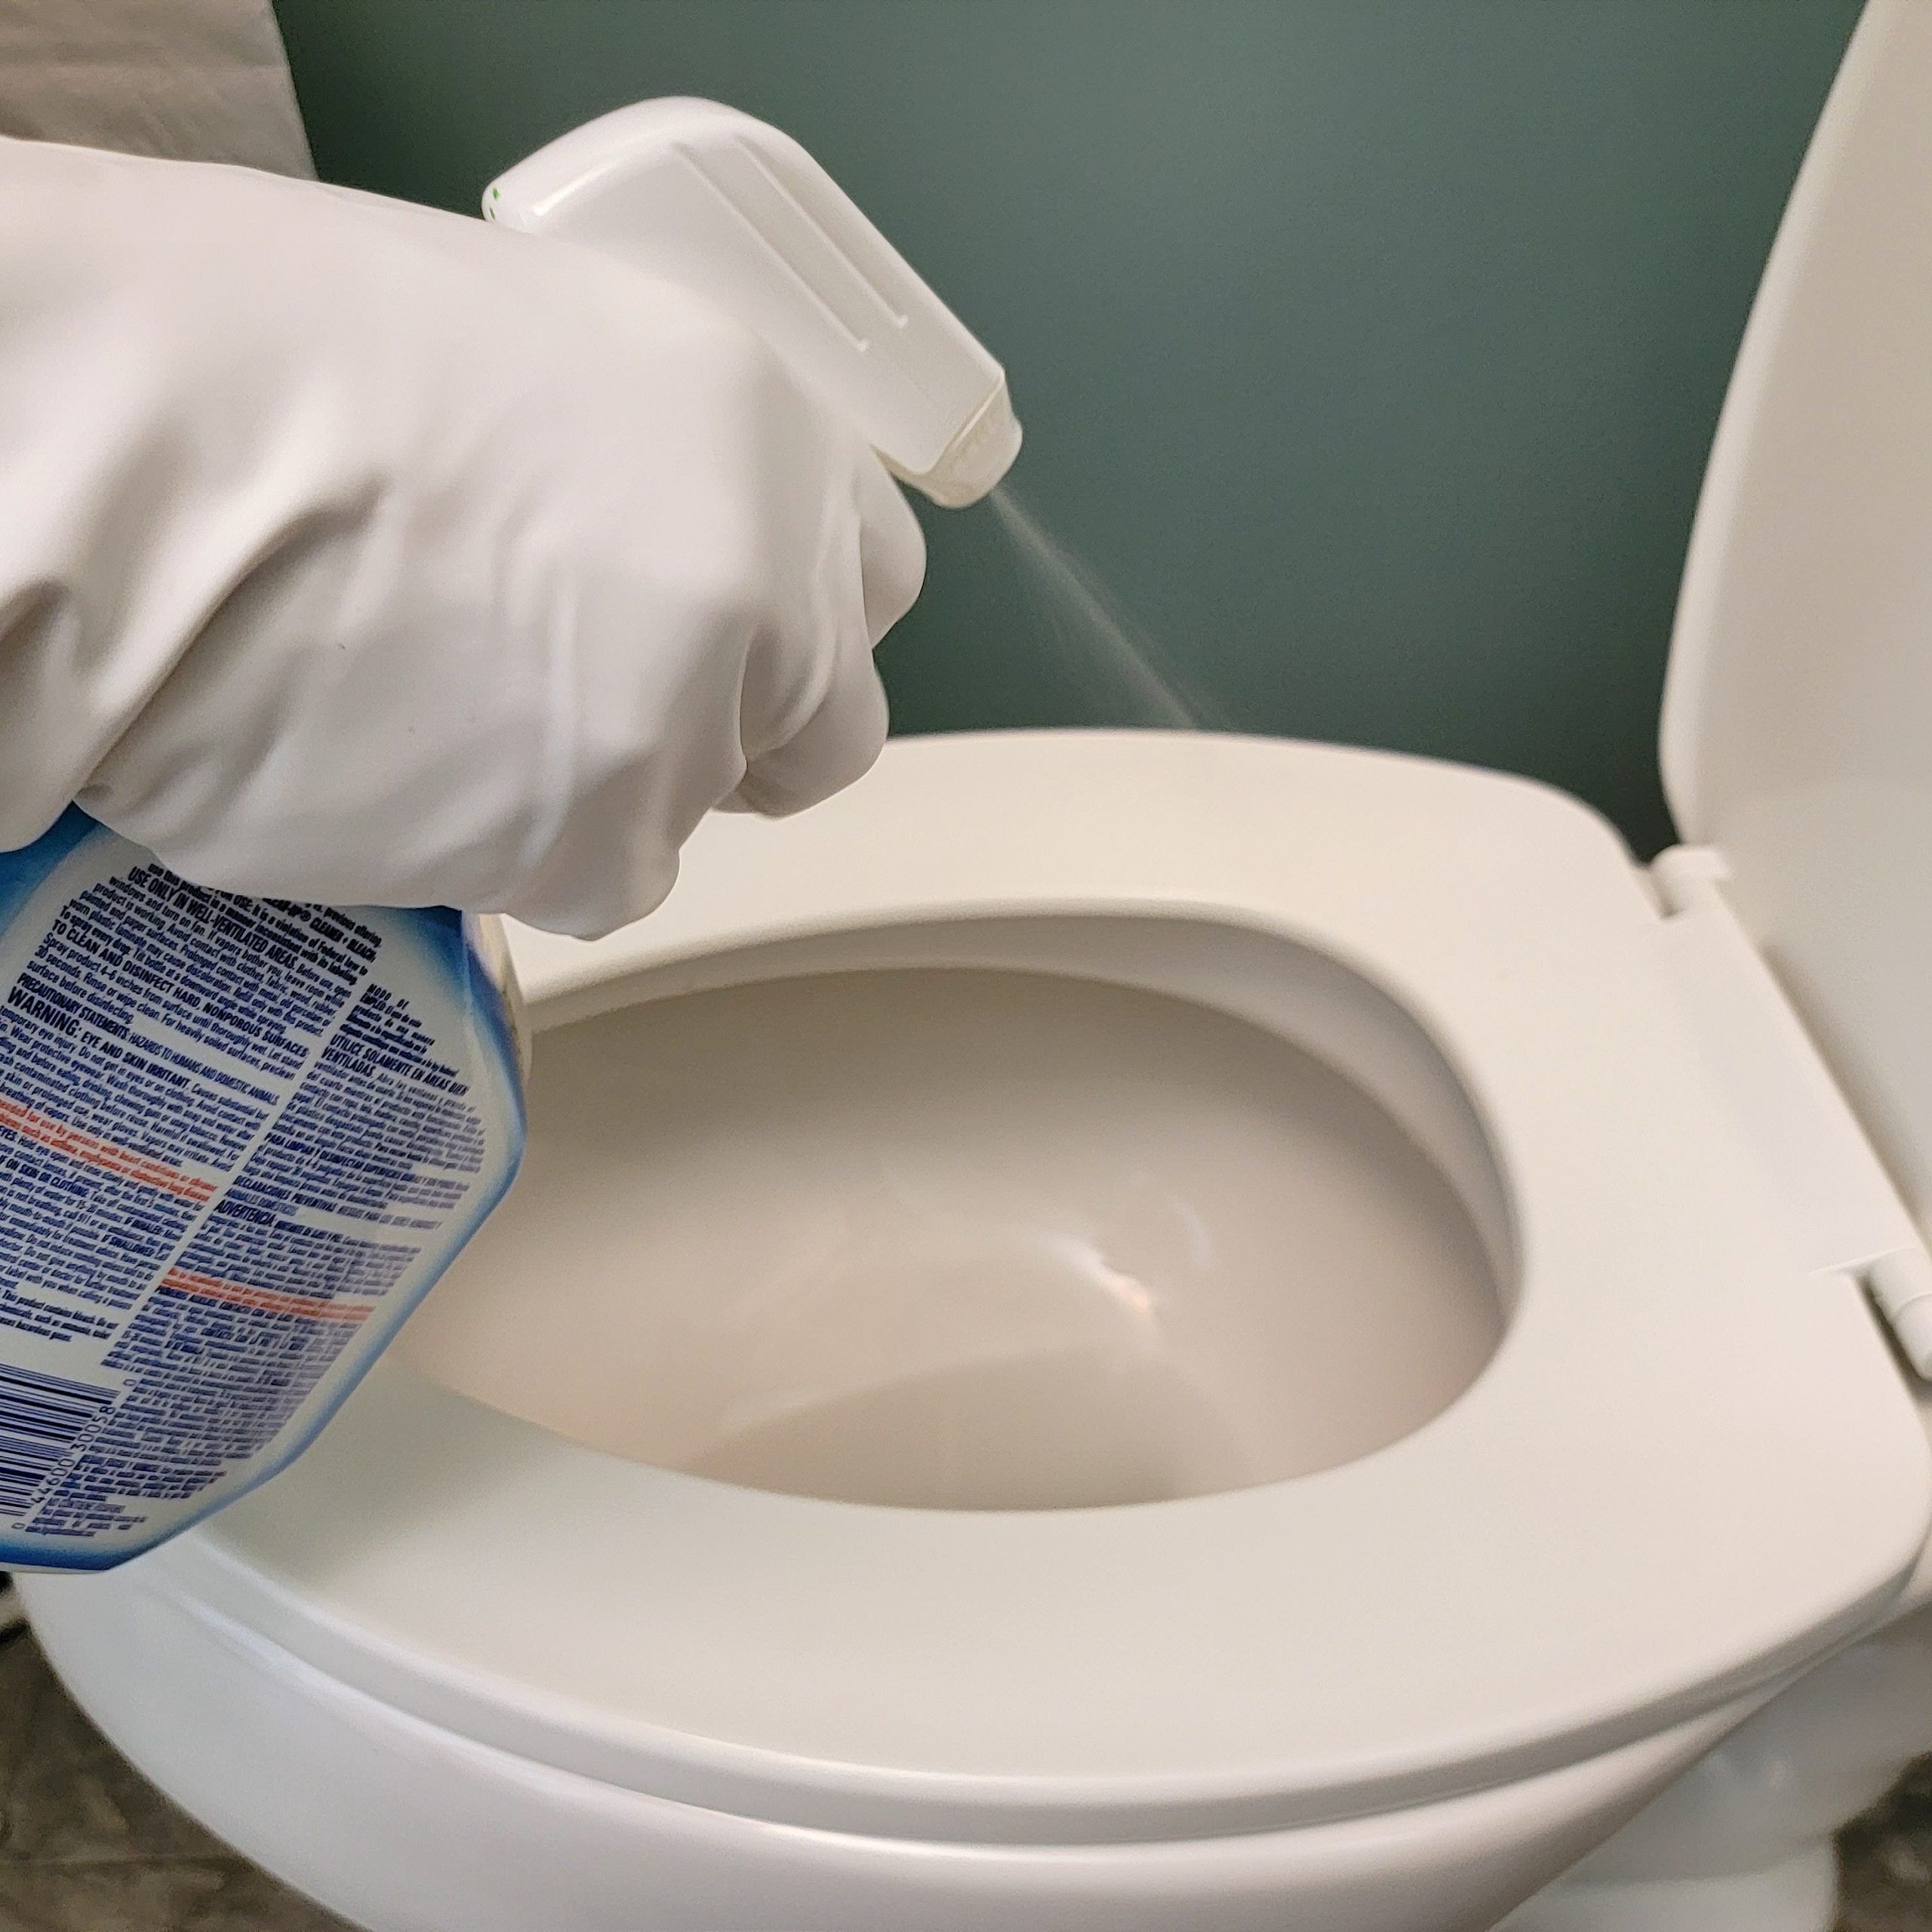 https://www.familyhandyman.com/wp-content/uploads/2021/10/toilet-cleaning-seat-1_Joe-Cruz-scaled.jpg?fit=640%2C640